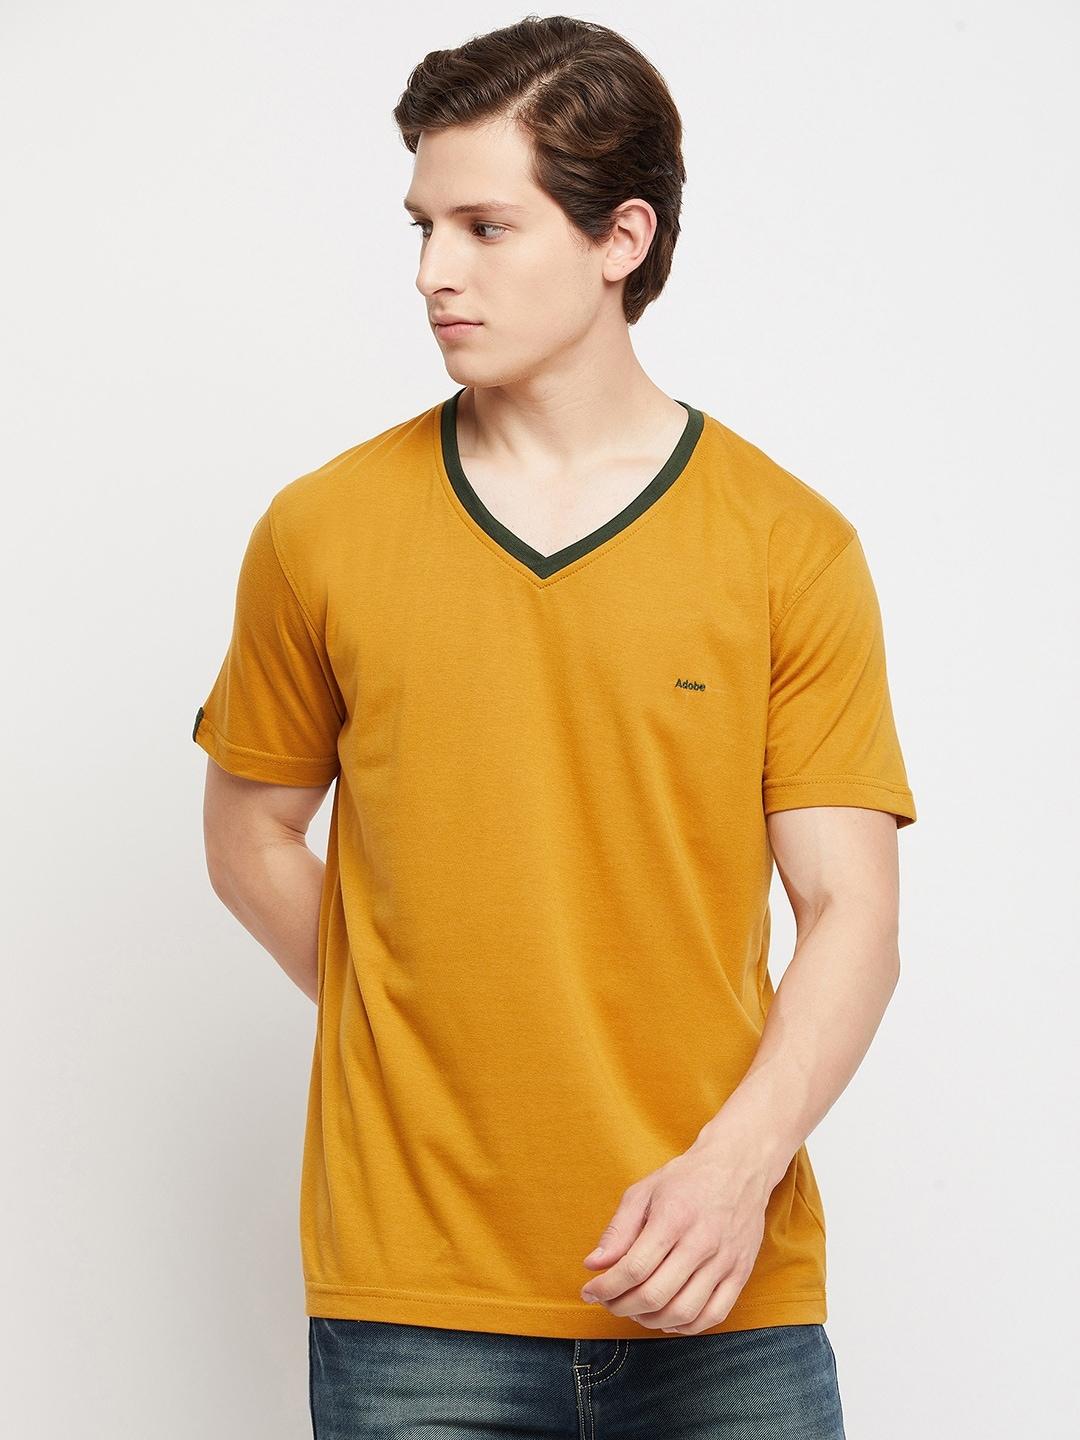 adobe men mustard yellow v-neck t-shirt